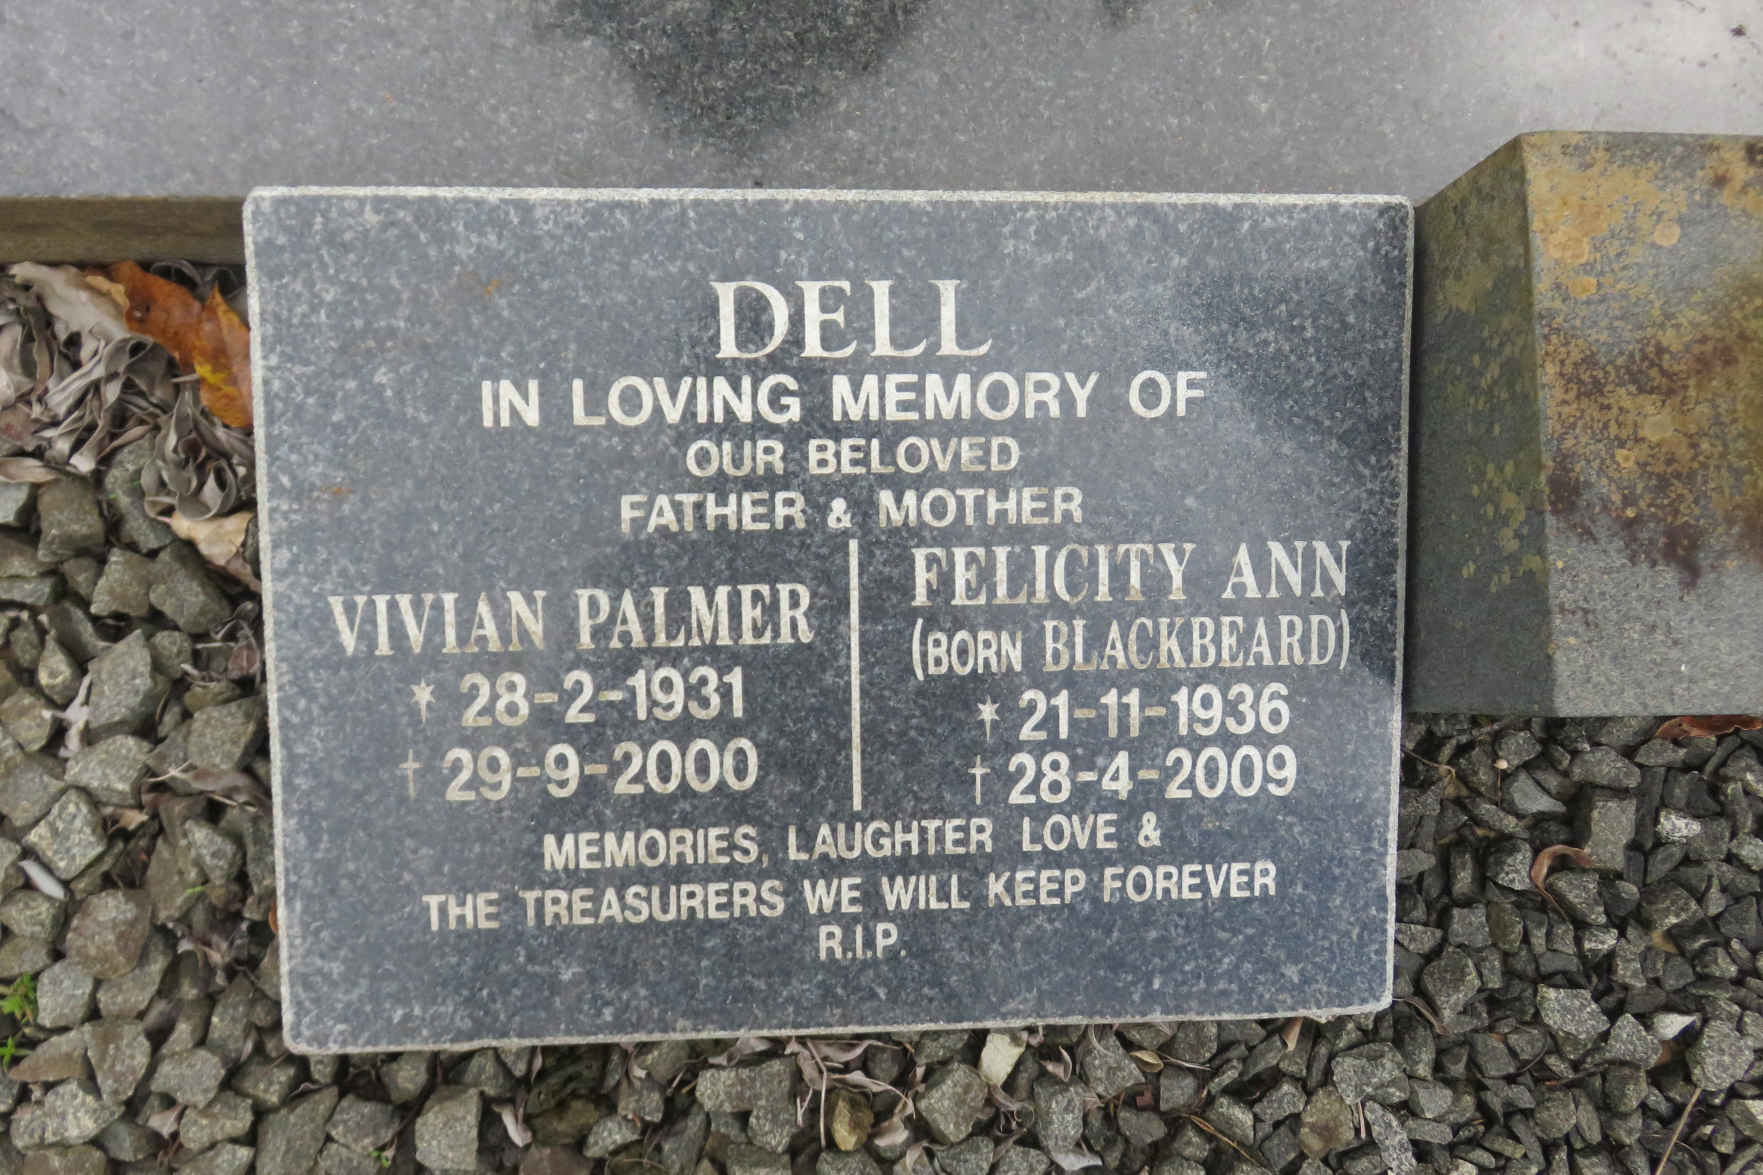 DELL Vivian Palmer 1931-2000 & Felicity Ann BLACKBEARD 1936-2009